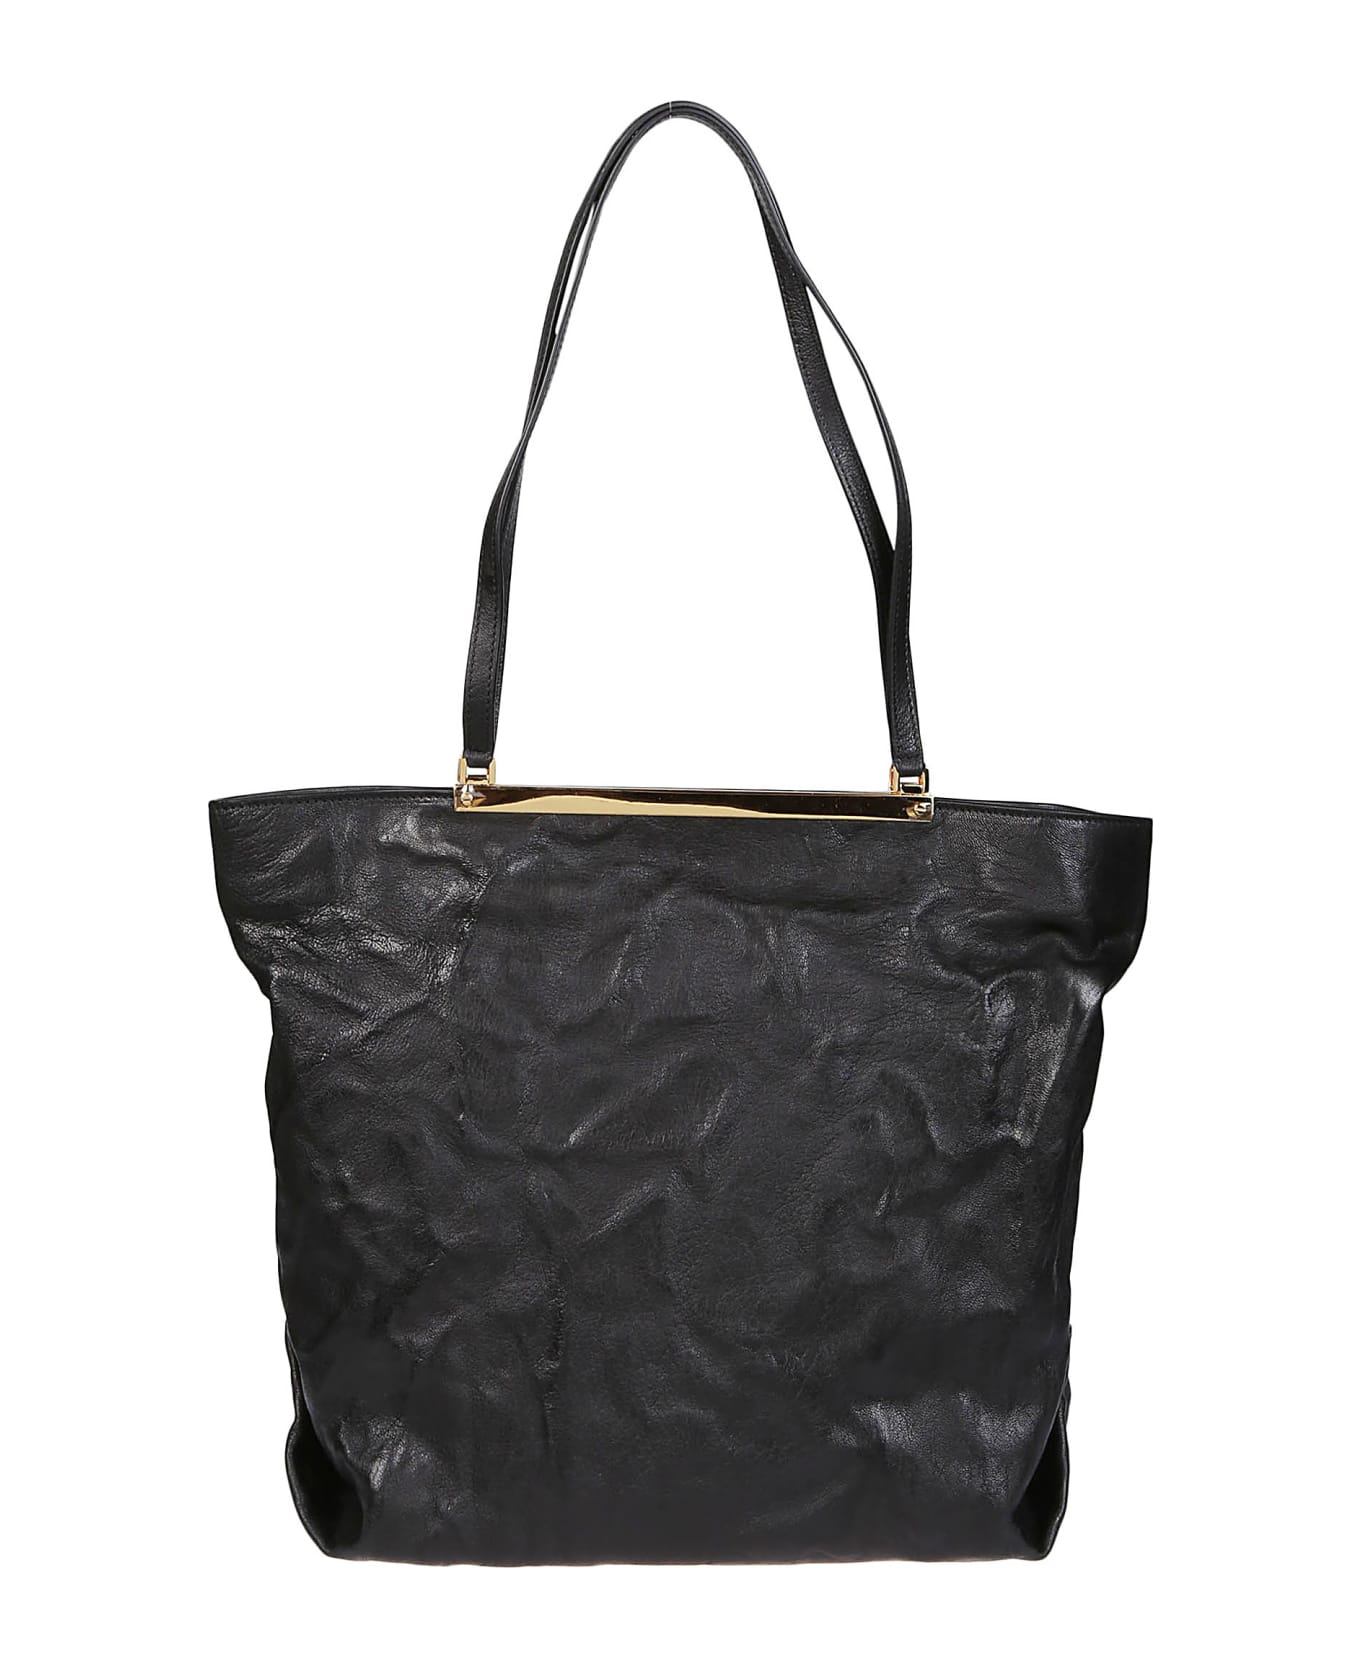 N.21 Barrette Stropicciata Shopping Bag - Black